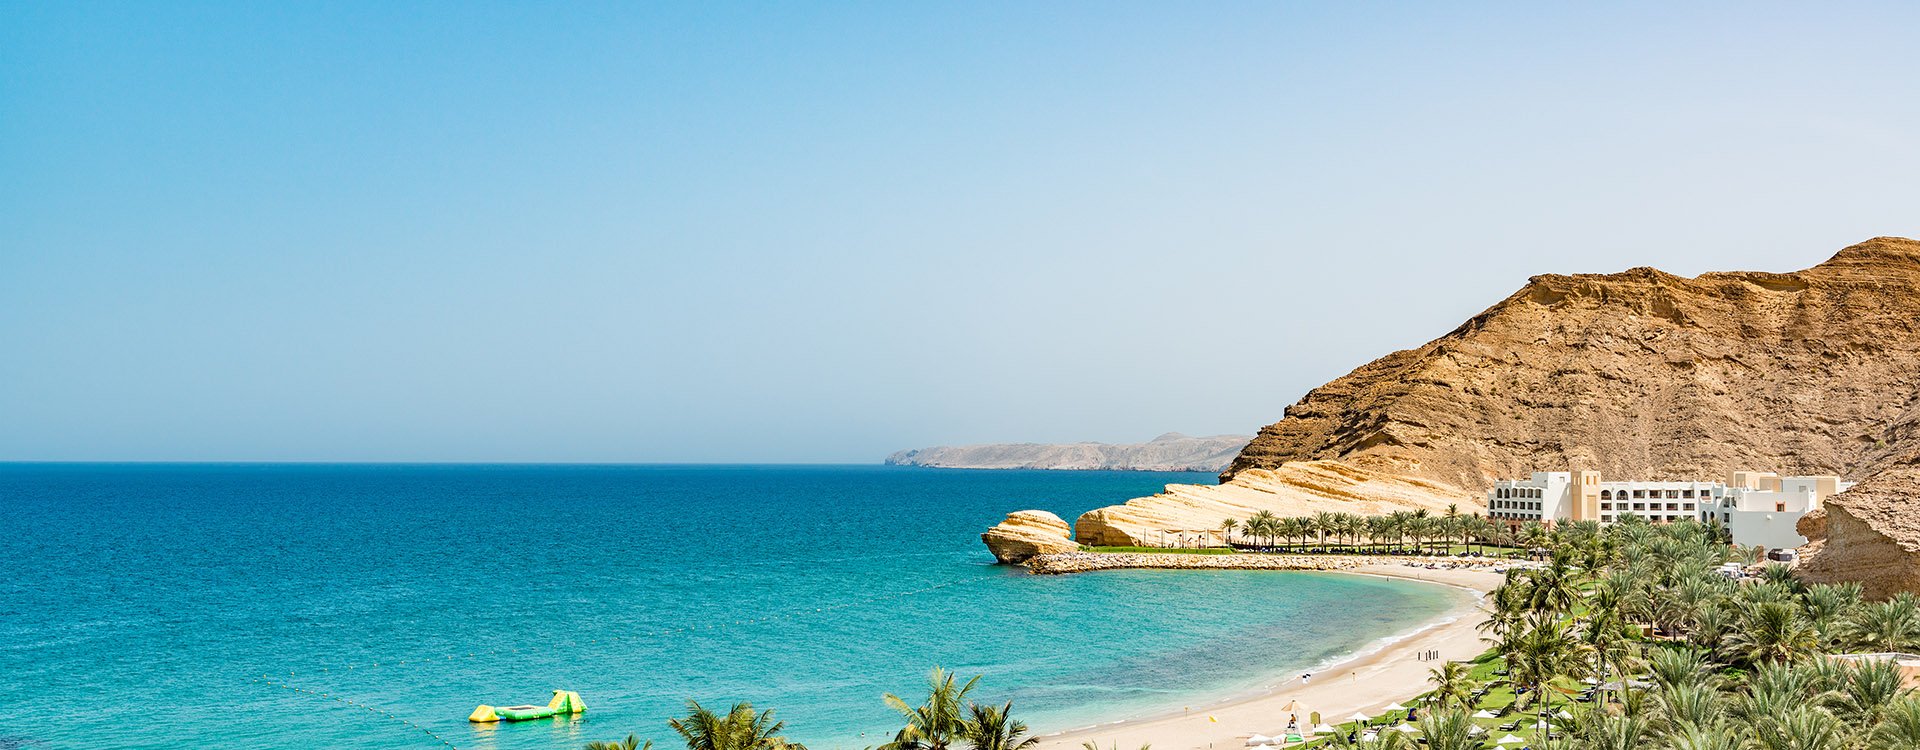 Omani Coast Landscape in east of Muscat, Oman.